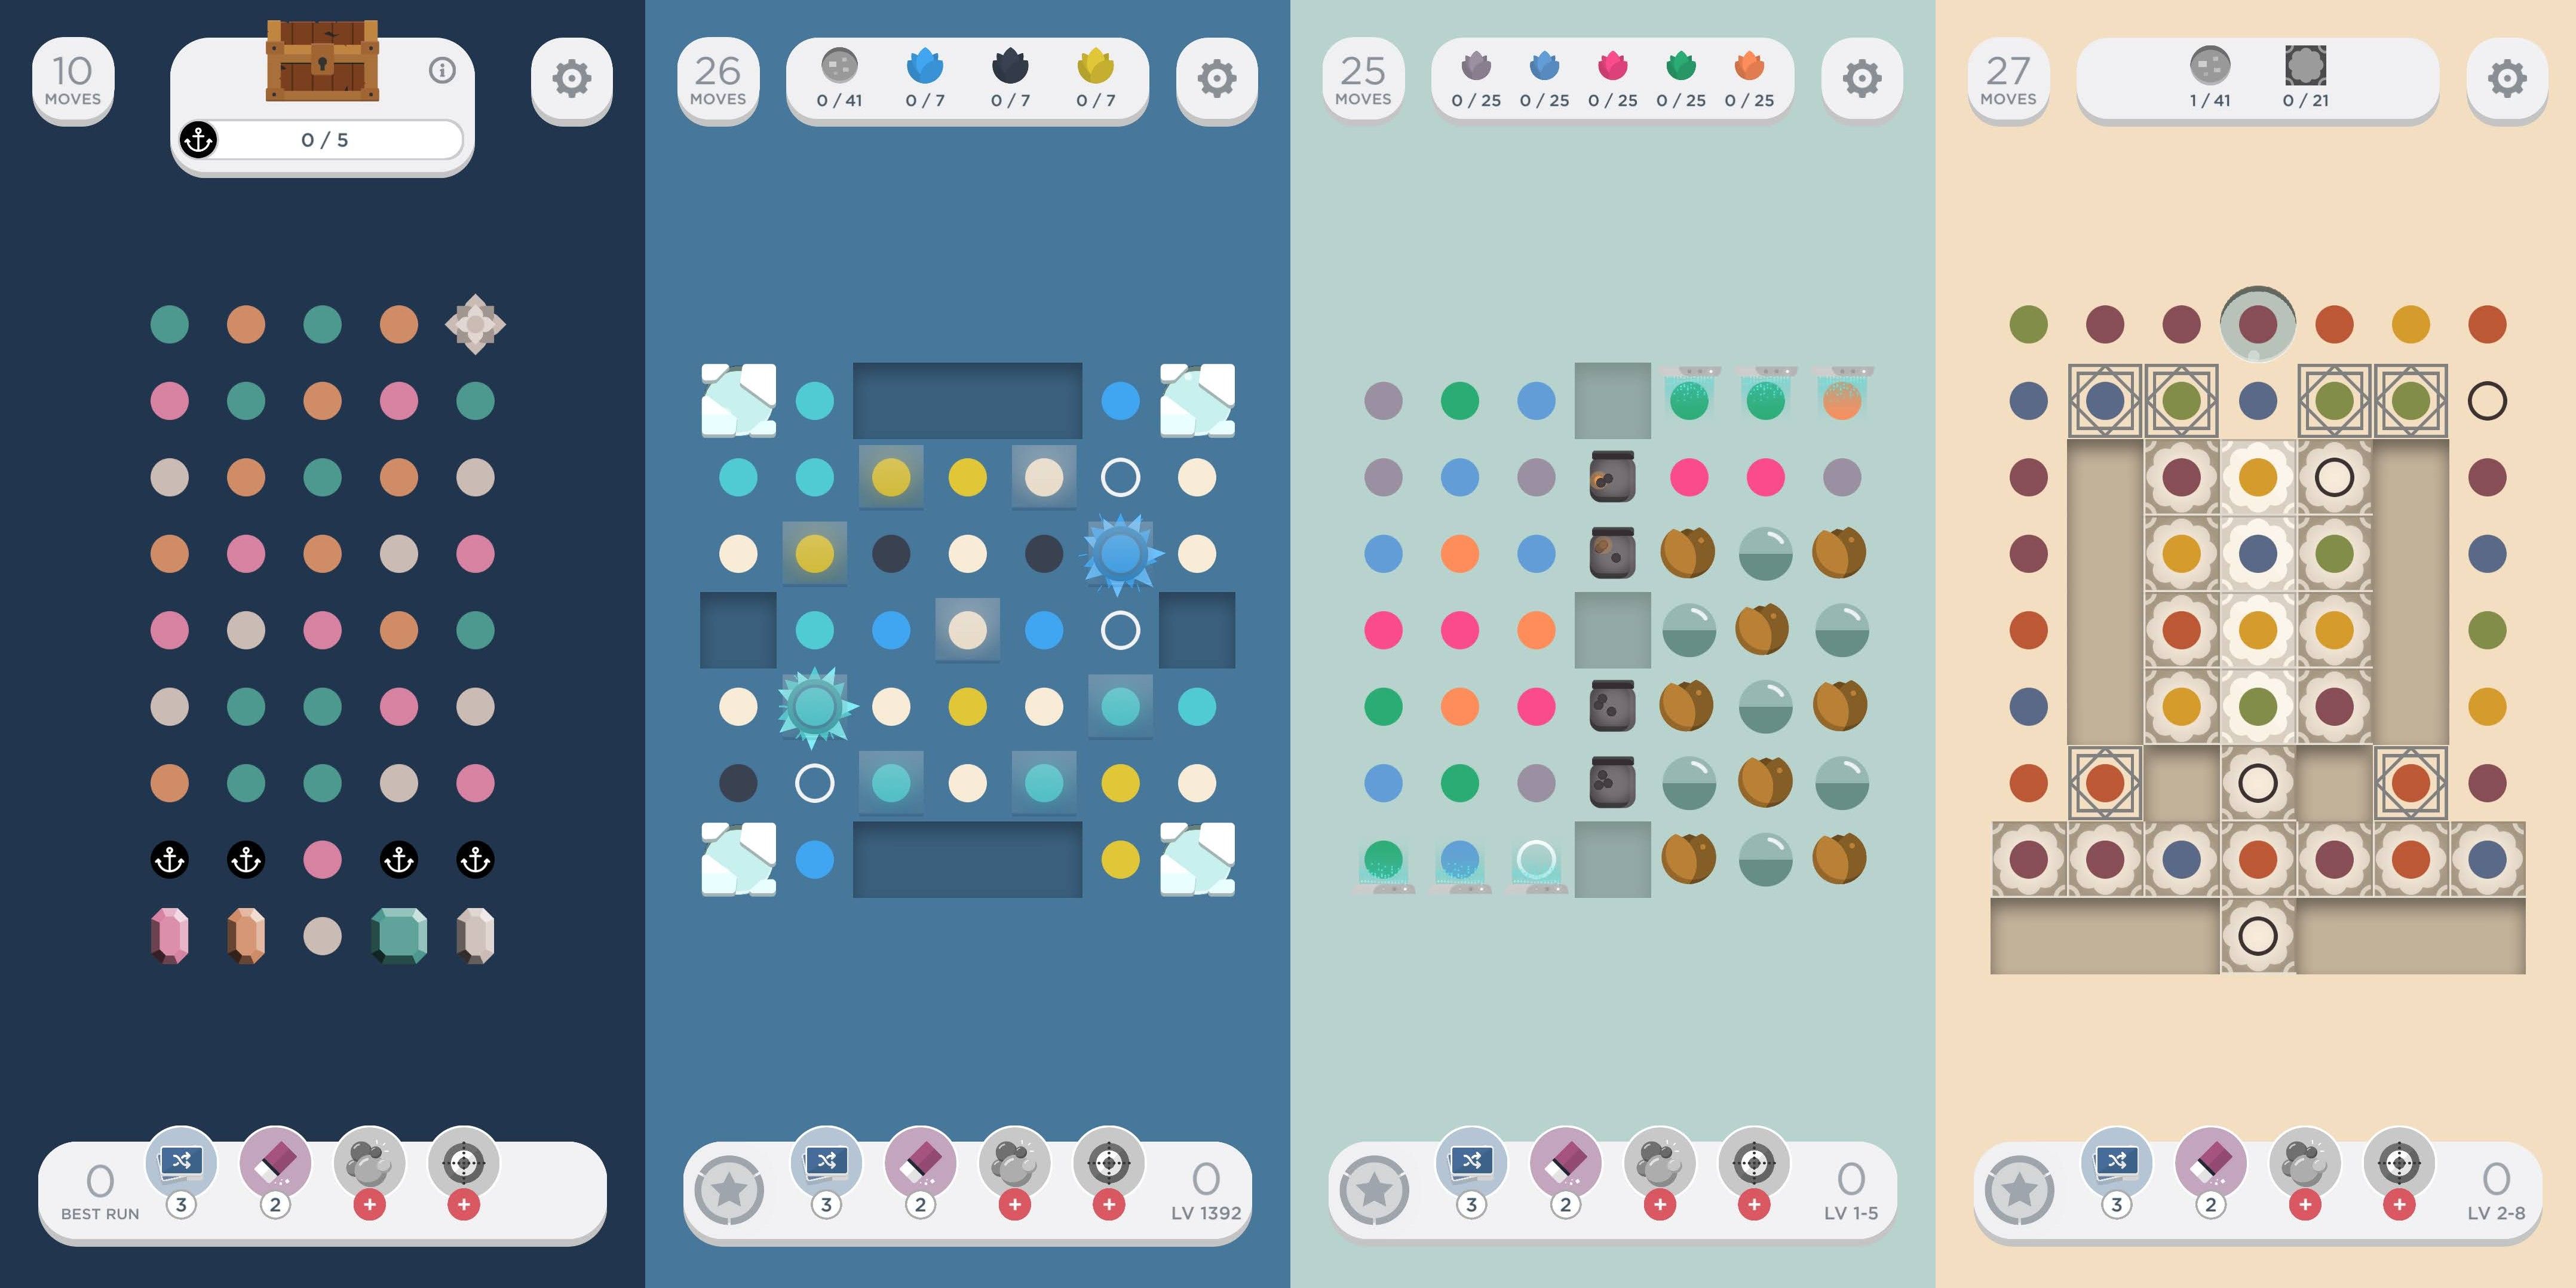 Two Dots gameplay screenshot